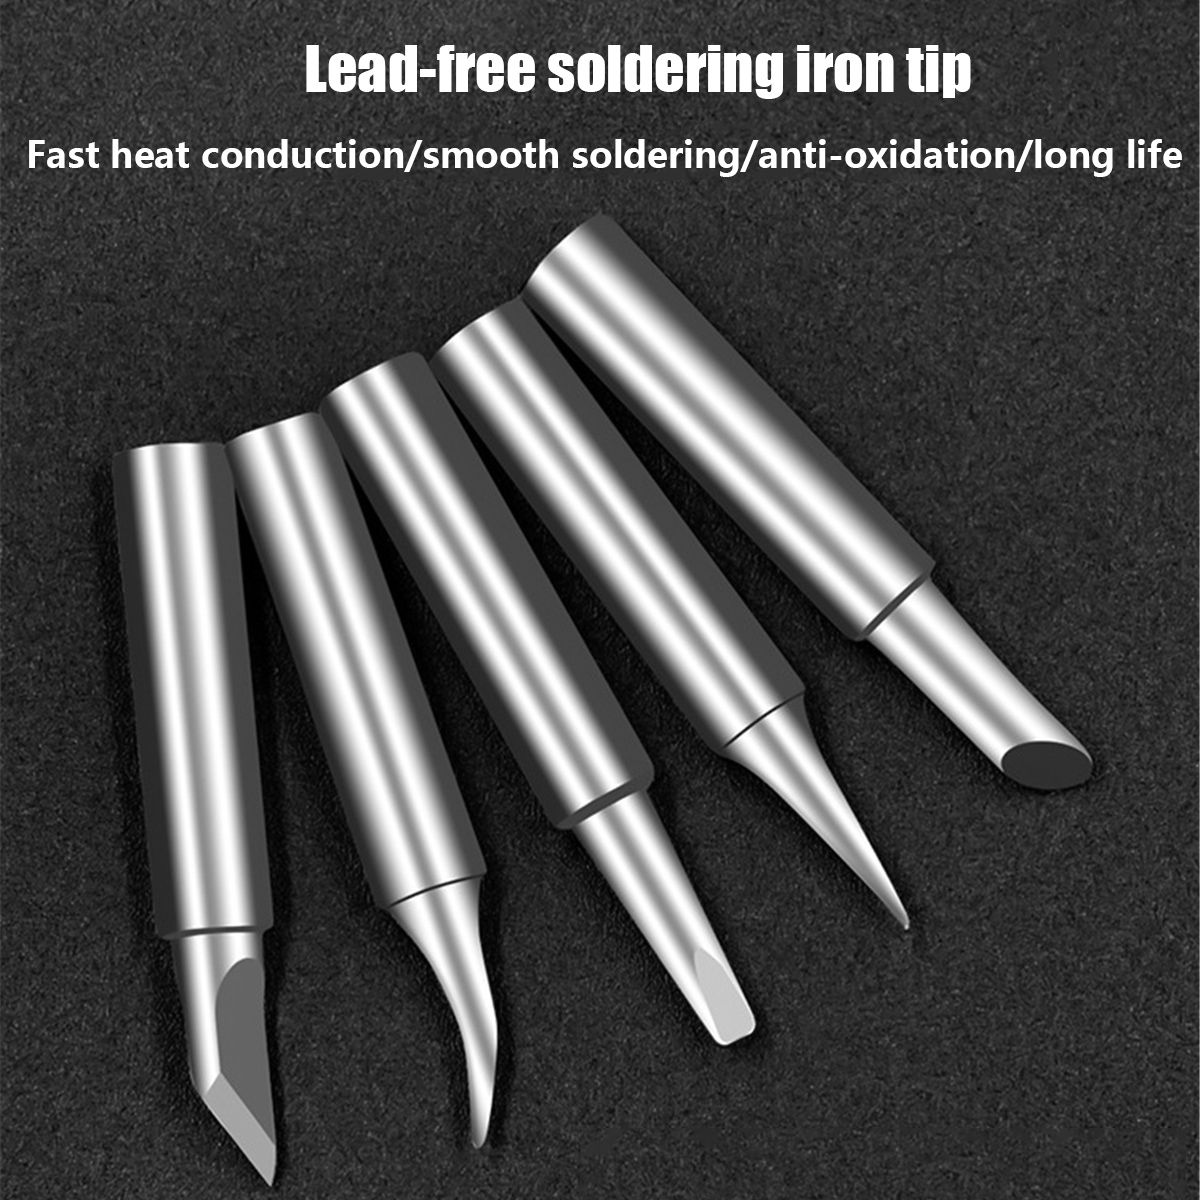 200Pcs-Wood-Burning-Pen-Set-Stencil-Soldering-Iron-Tips-Tools-Pyrography-Kit-1729992